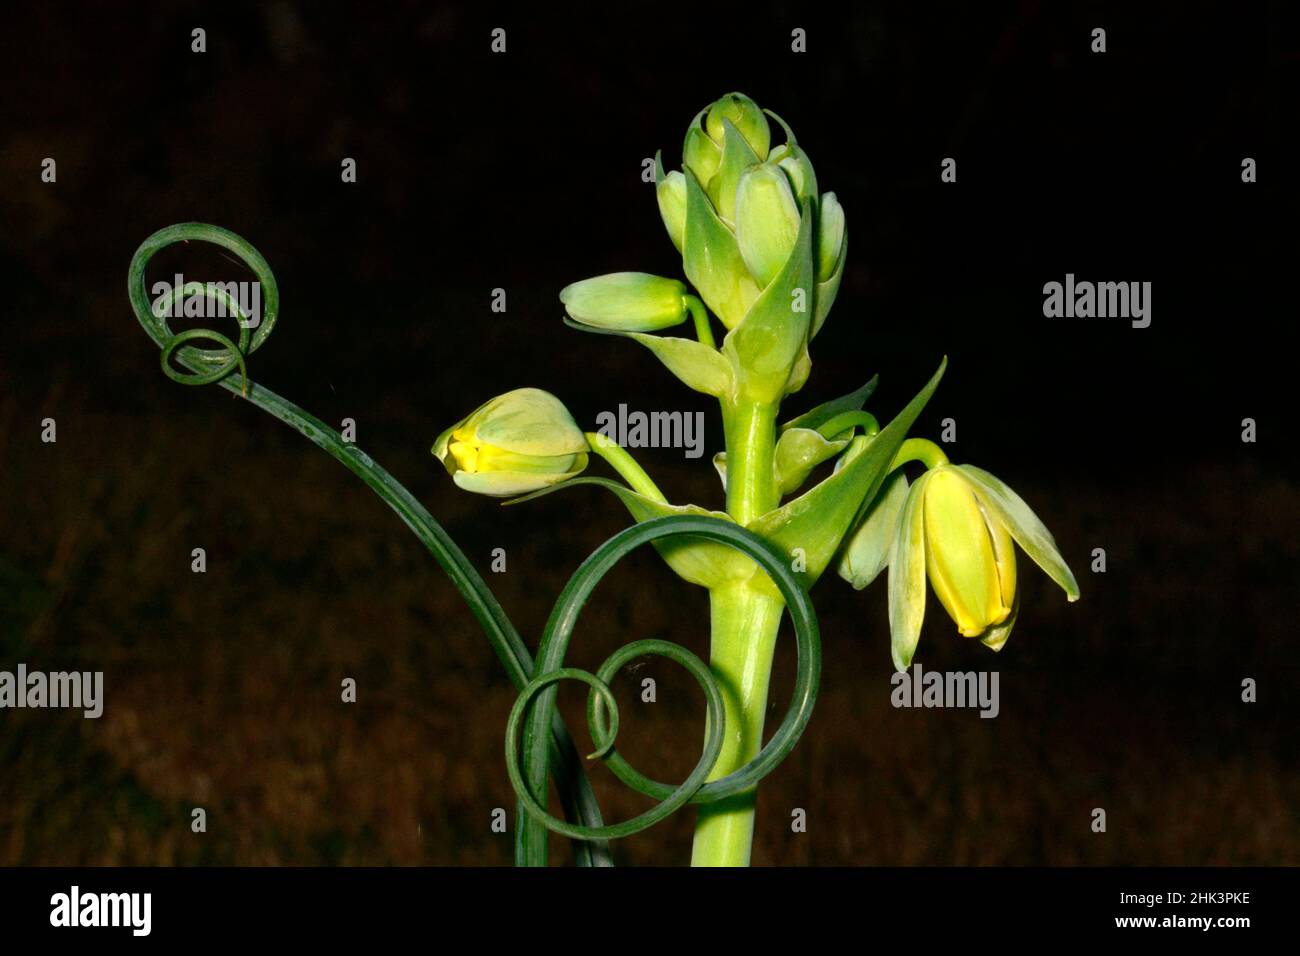 Corkscrew albuca (Albuca spiralis) flowers and tendril, South Africa Stock Photo